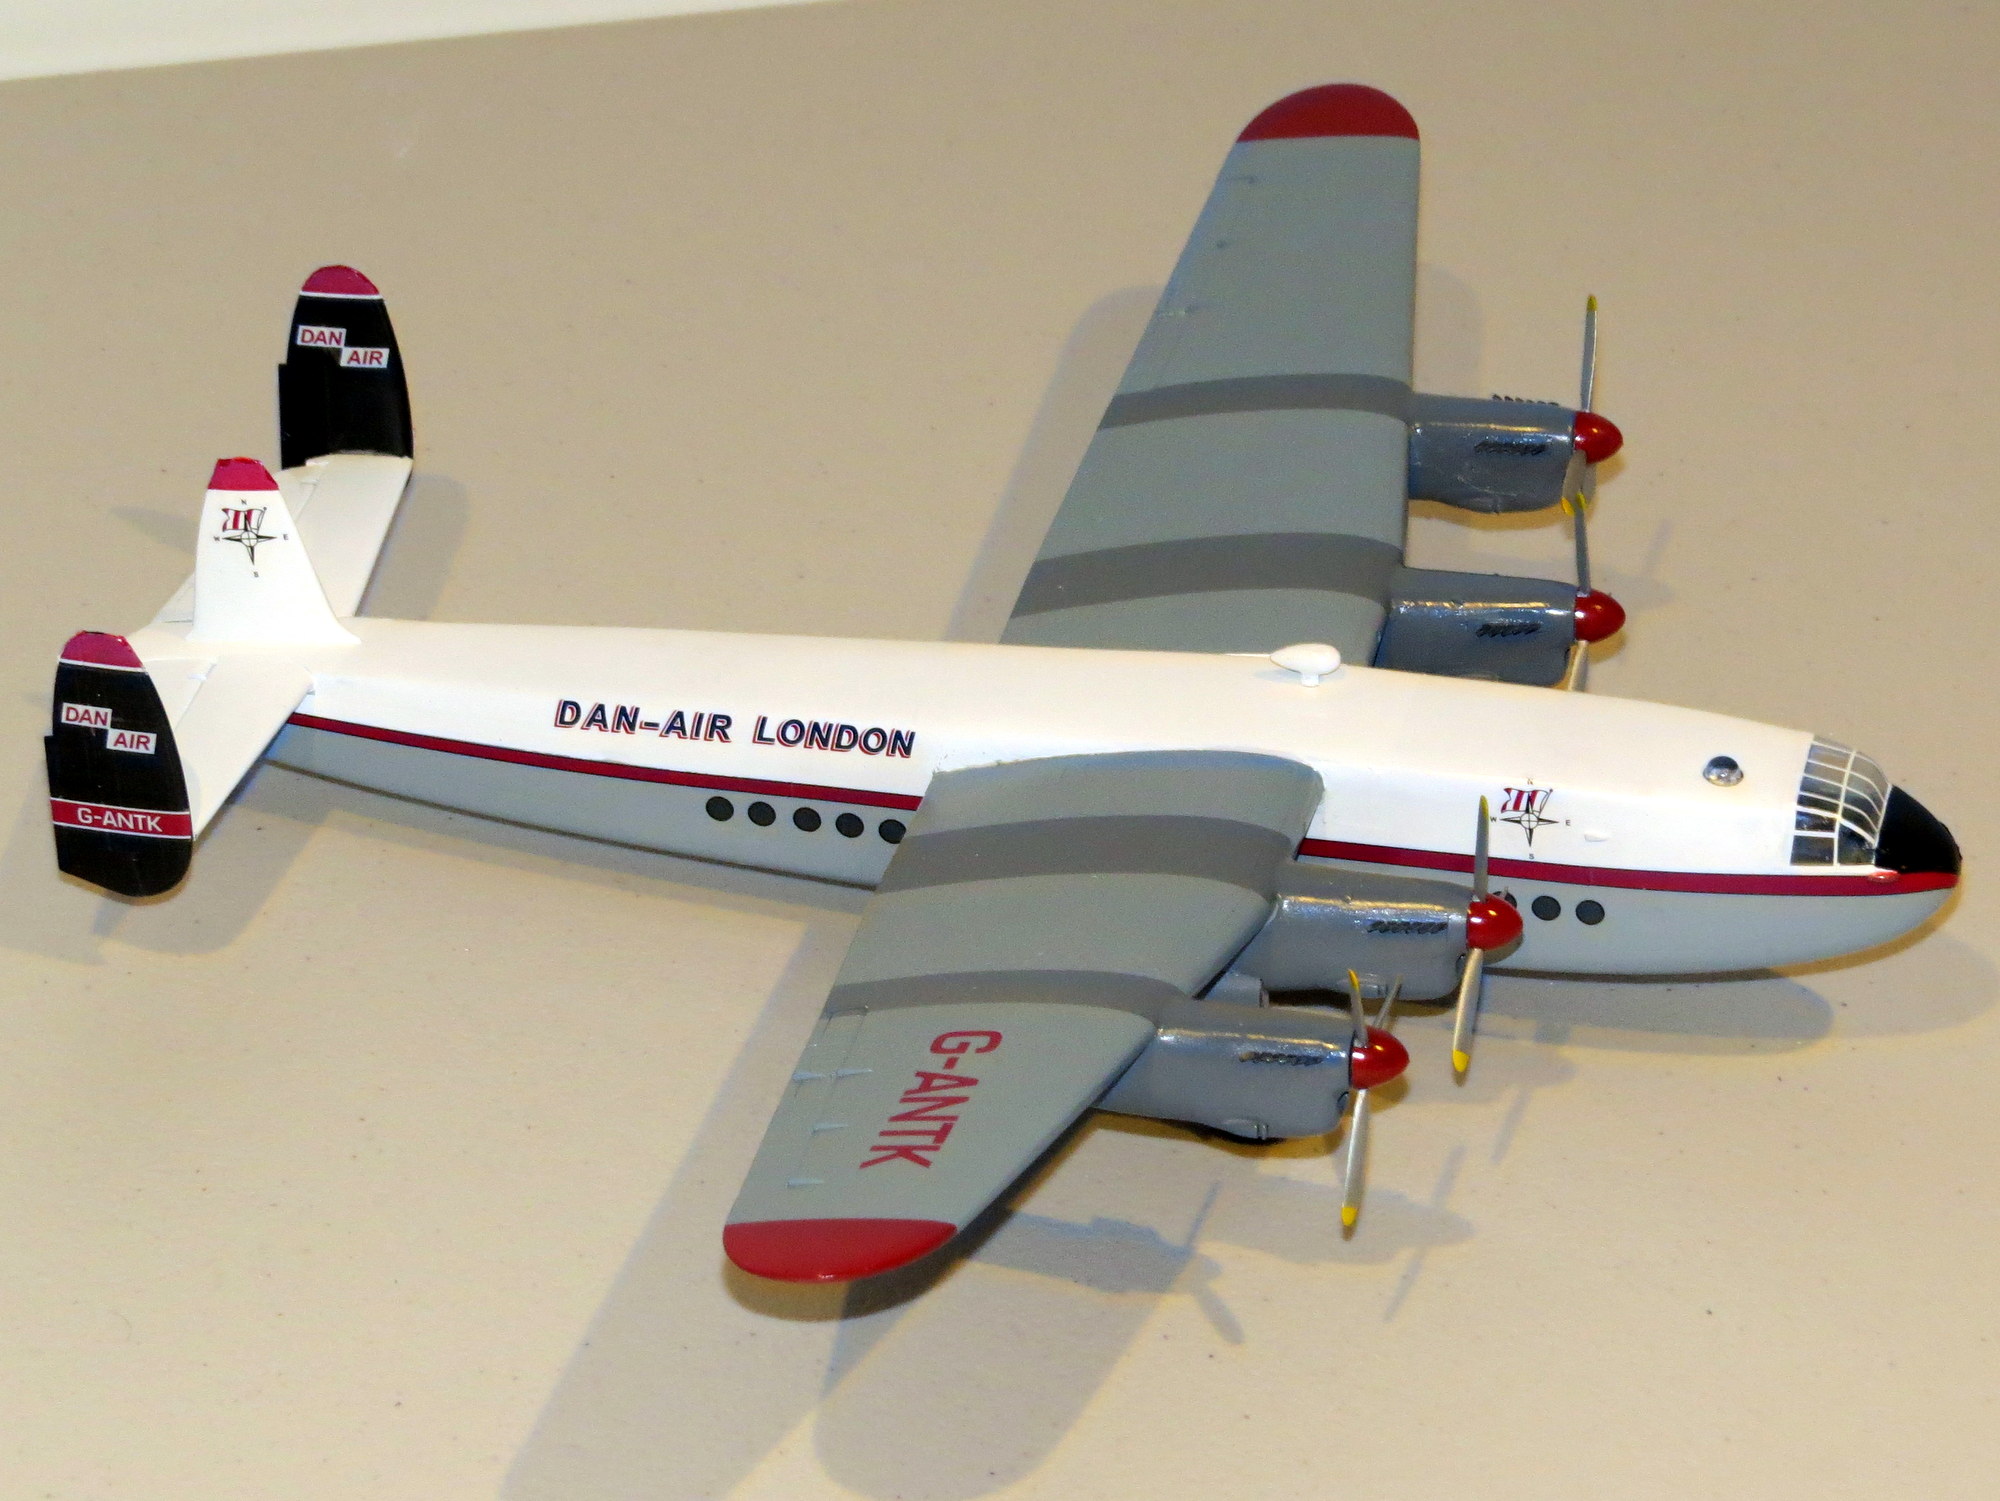 Mach 2 Models 1/72 AVRO YORK Berlin Airlift